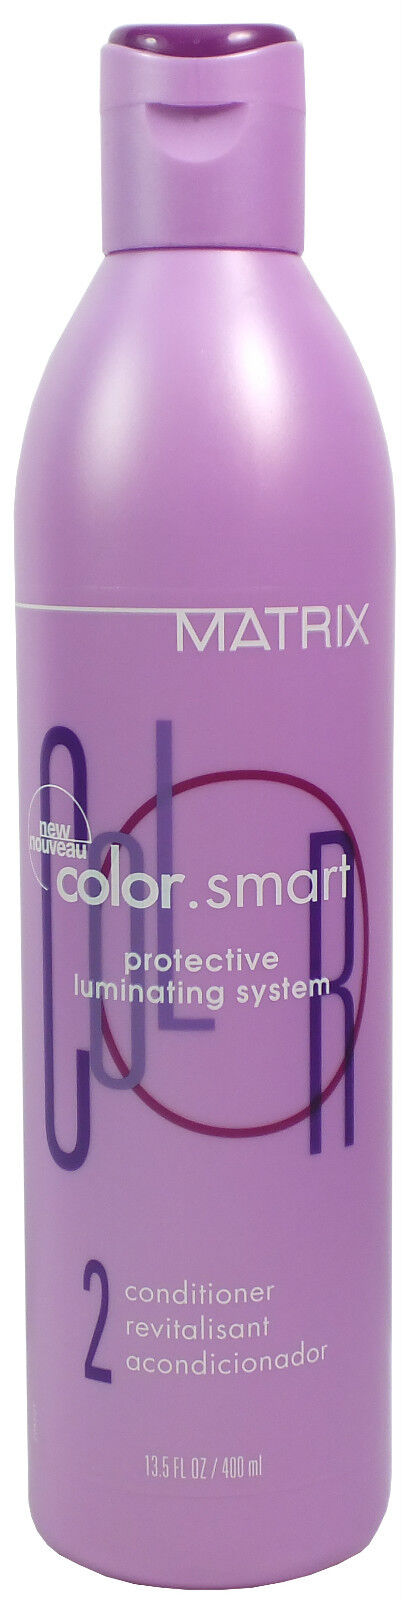 Matrix Color Smart Protective Illuminating System Conditioner 400ml